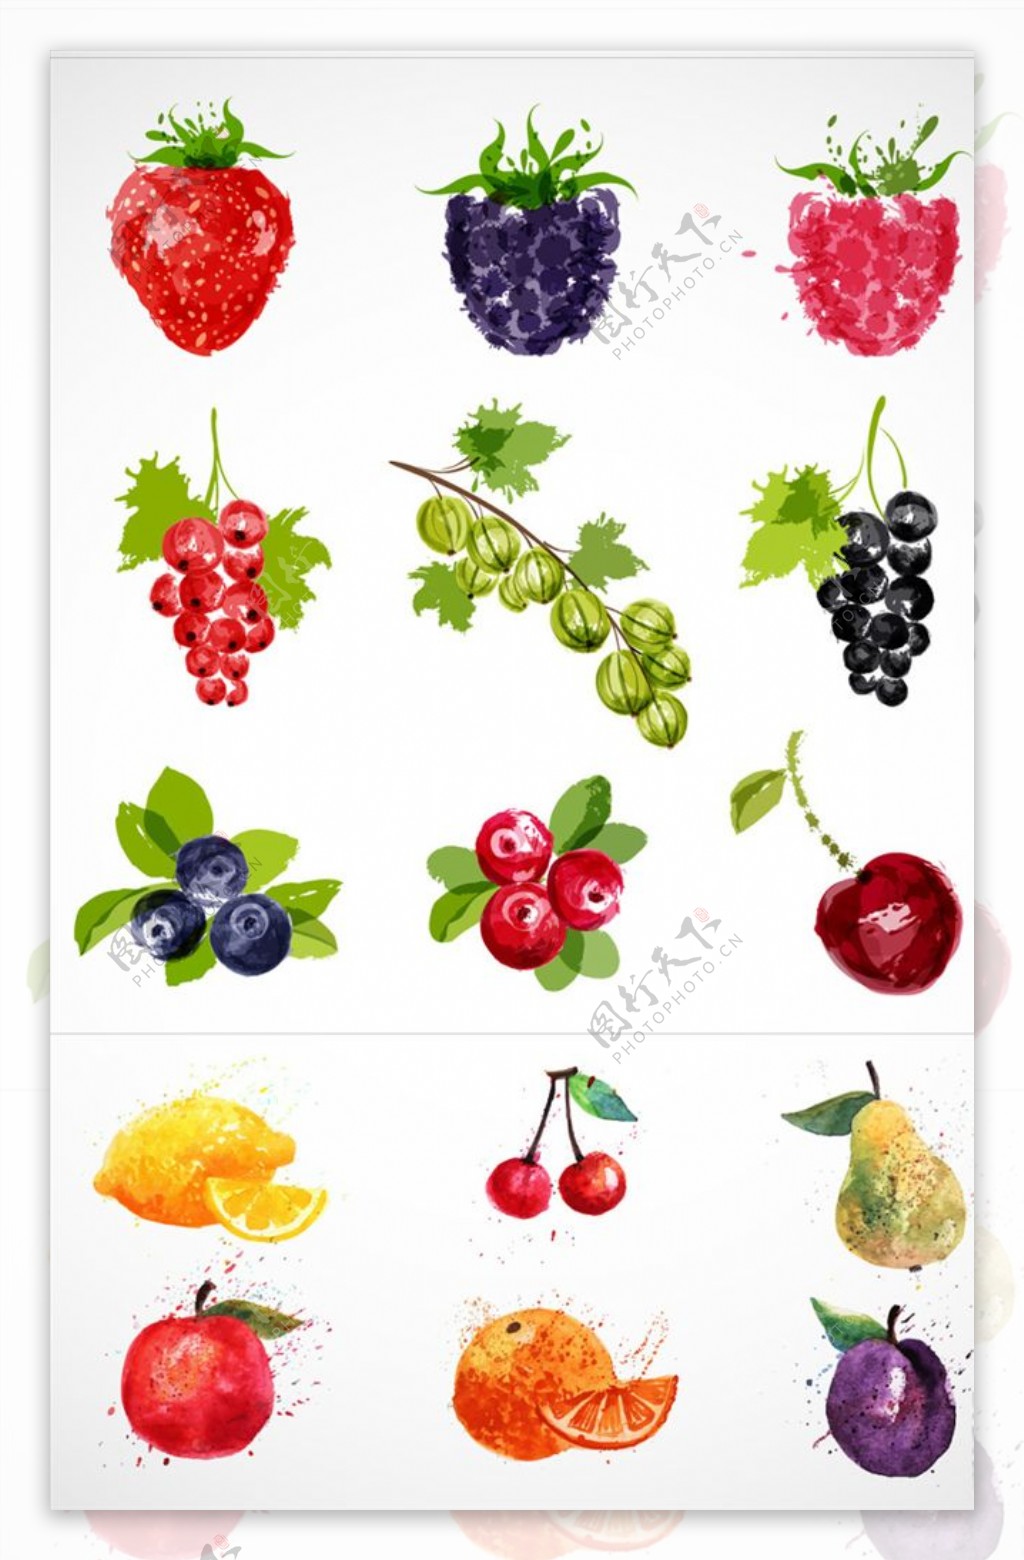 水果彩绘草莓插画